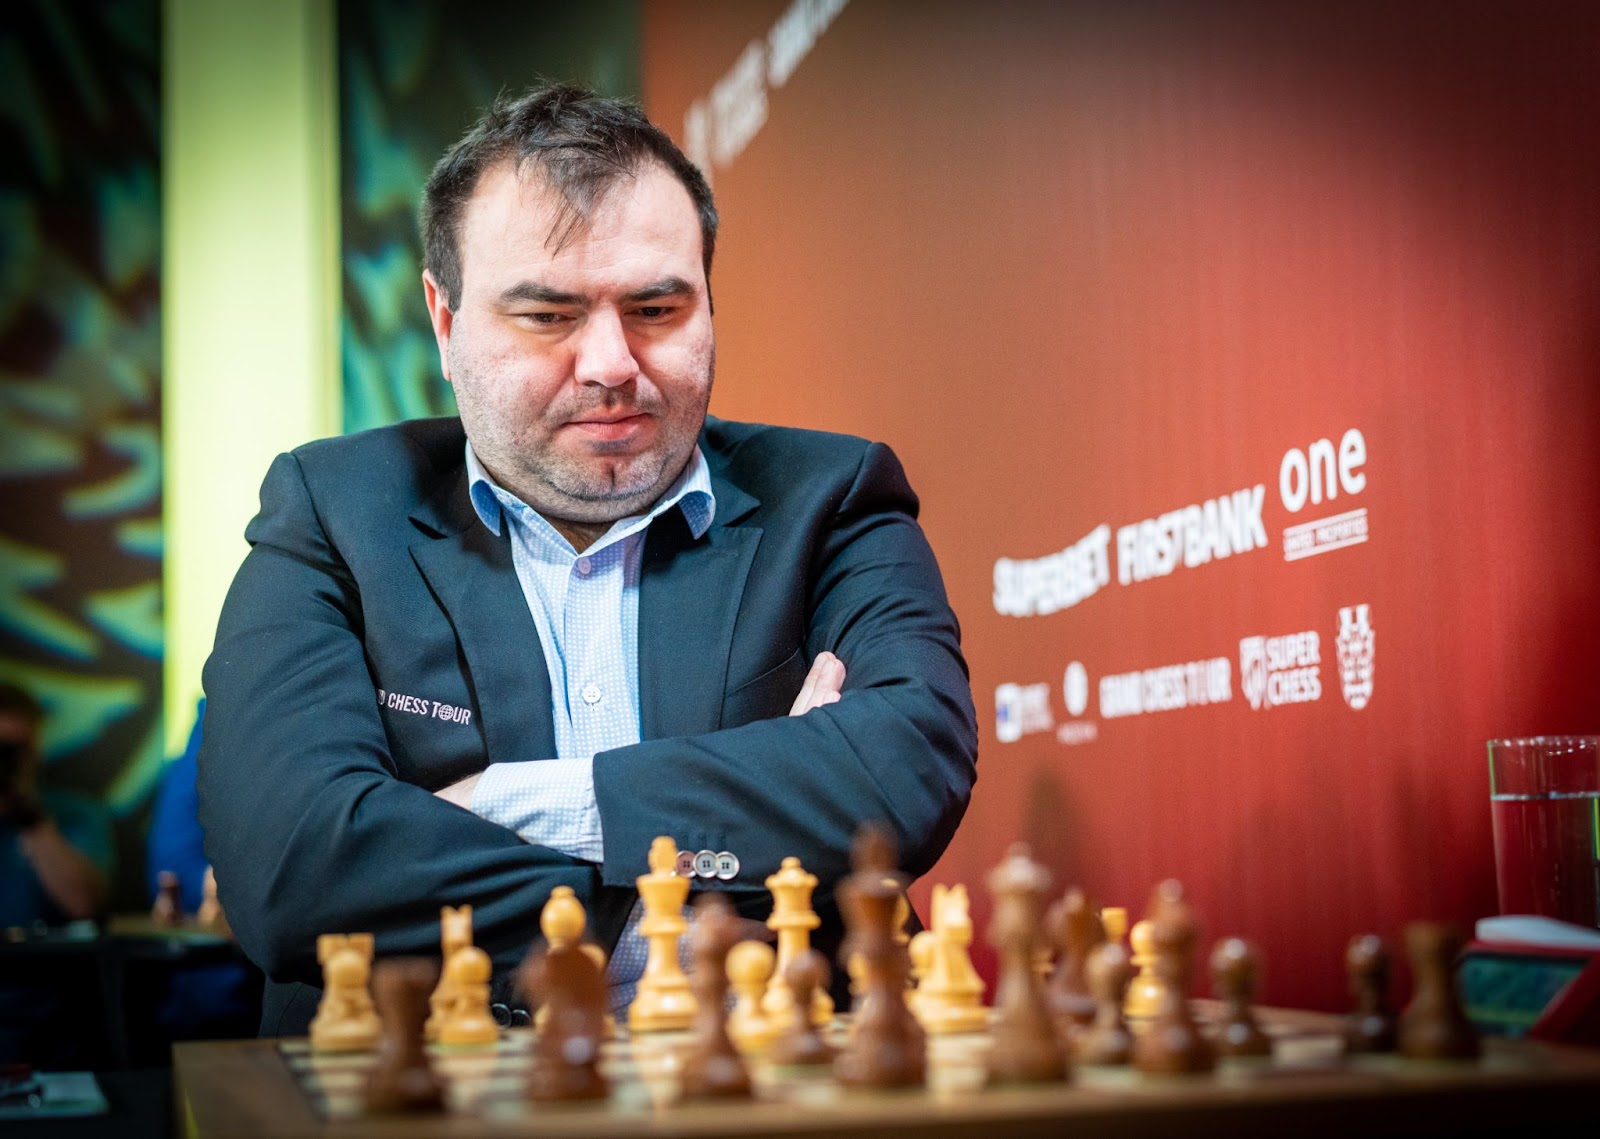 Deac surprises Rapport; Grand Chess Tour Romania 2022 gets the leading trio  – R3 recap – Chessdom